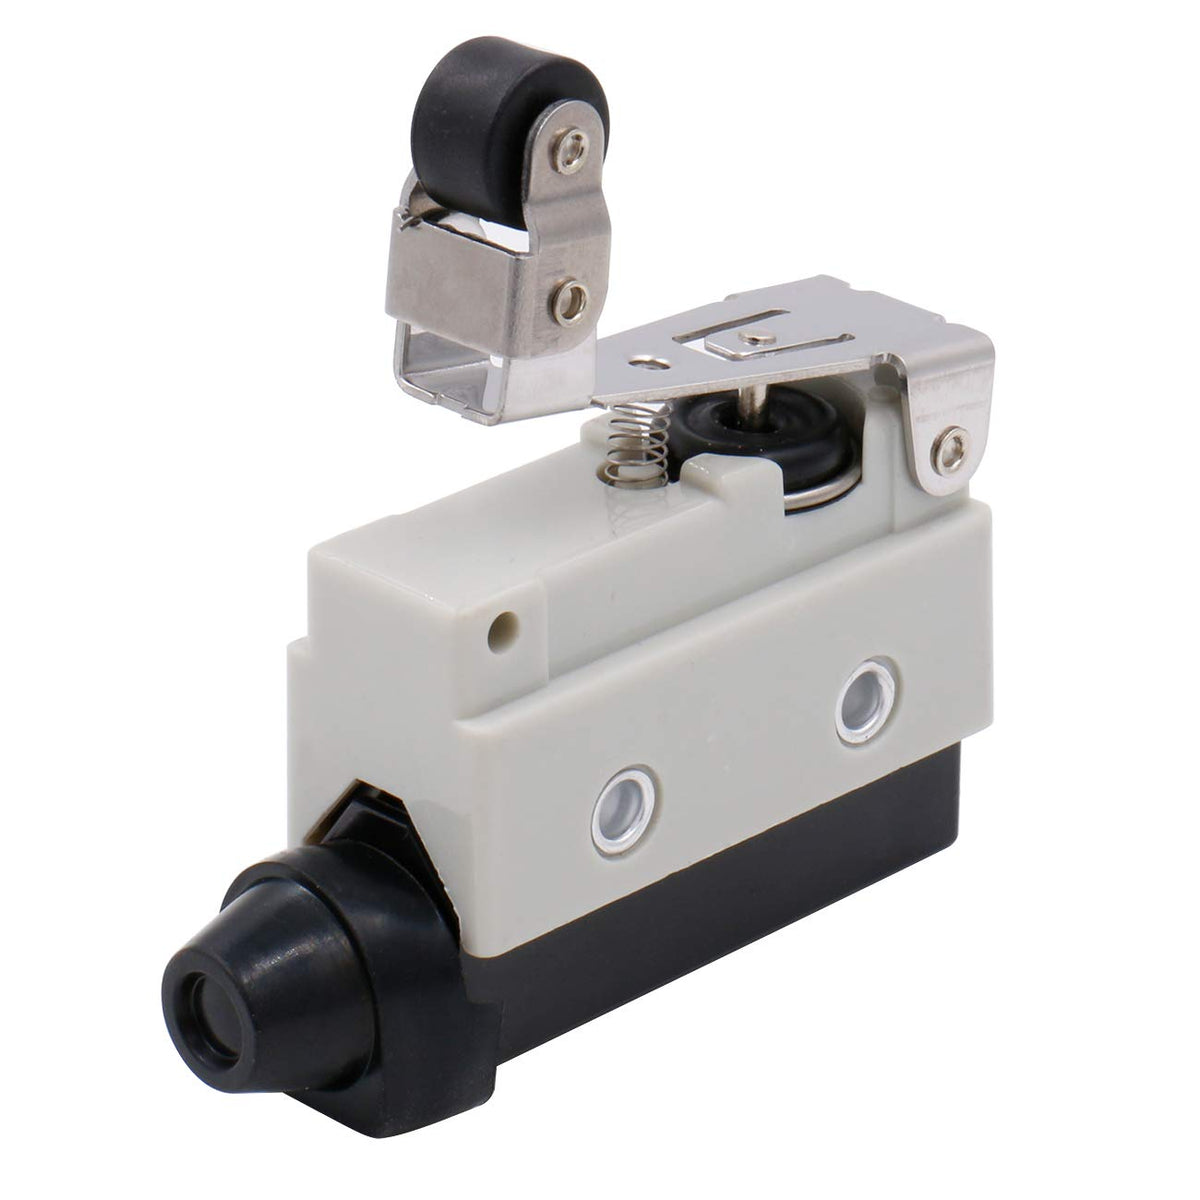 Heschen Horizontal limit switch TZ-7144 single pole snap action roller